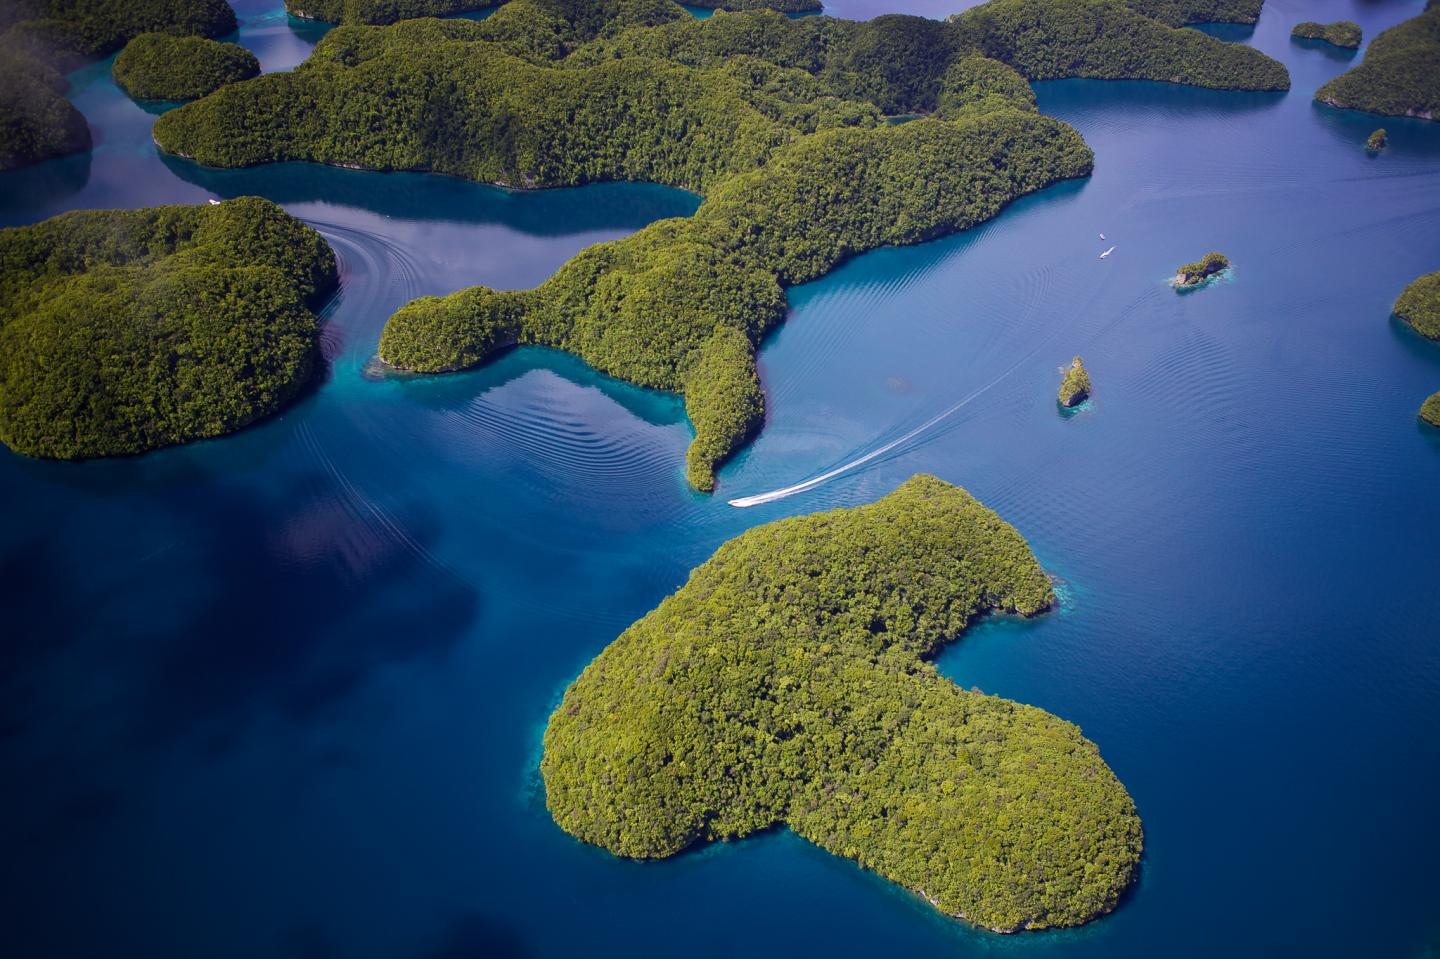 The Rock Islands of Palau